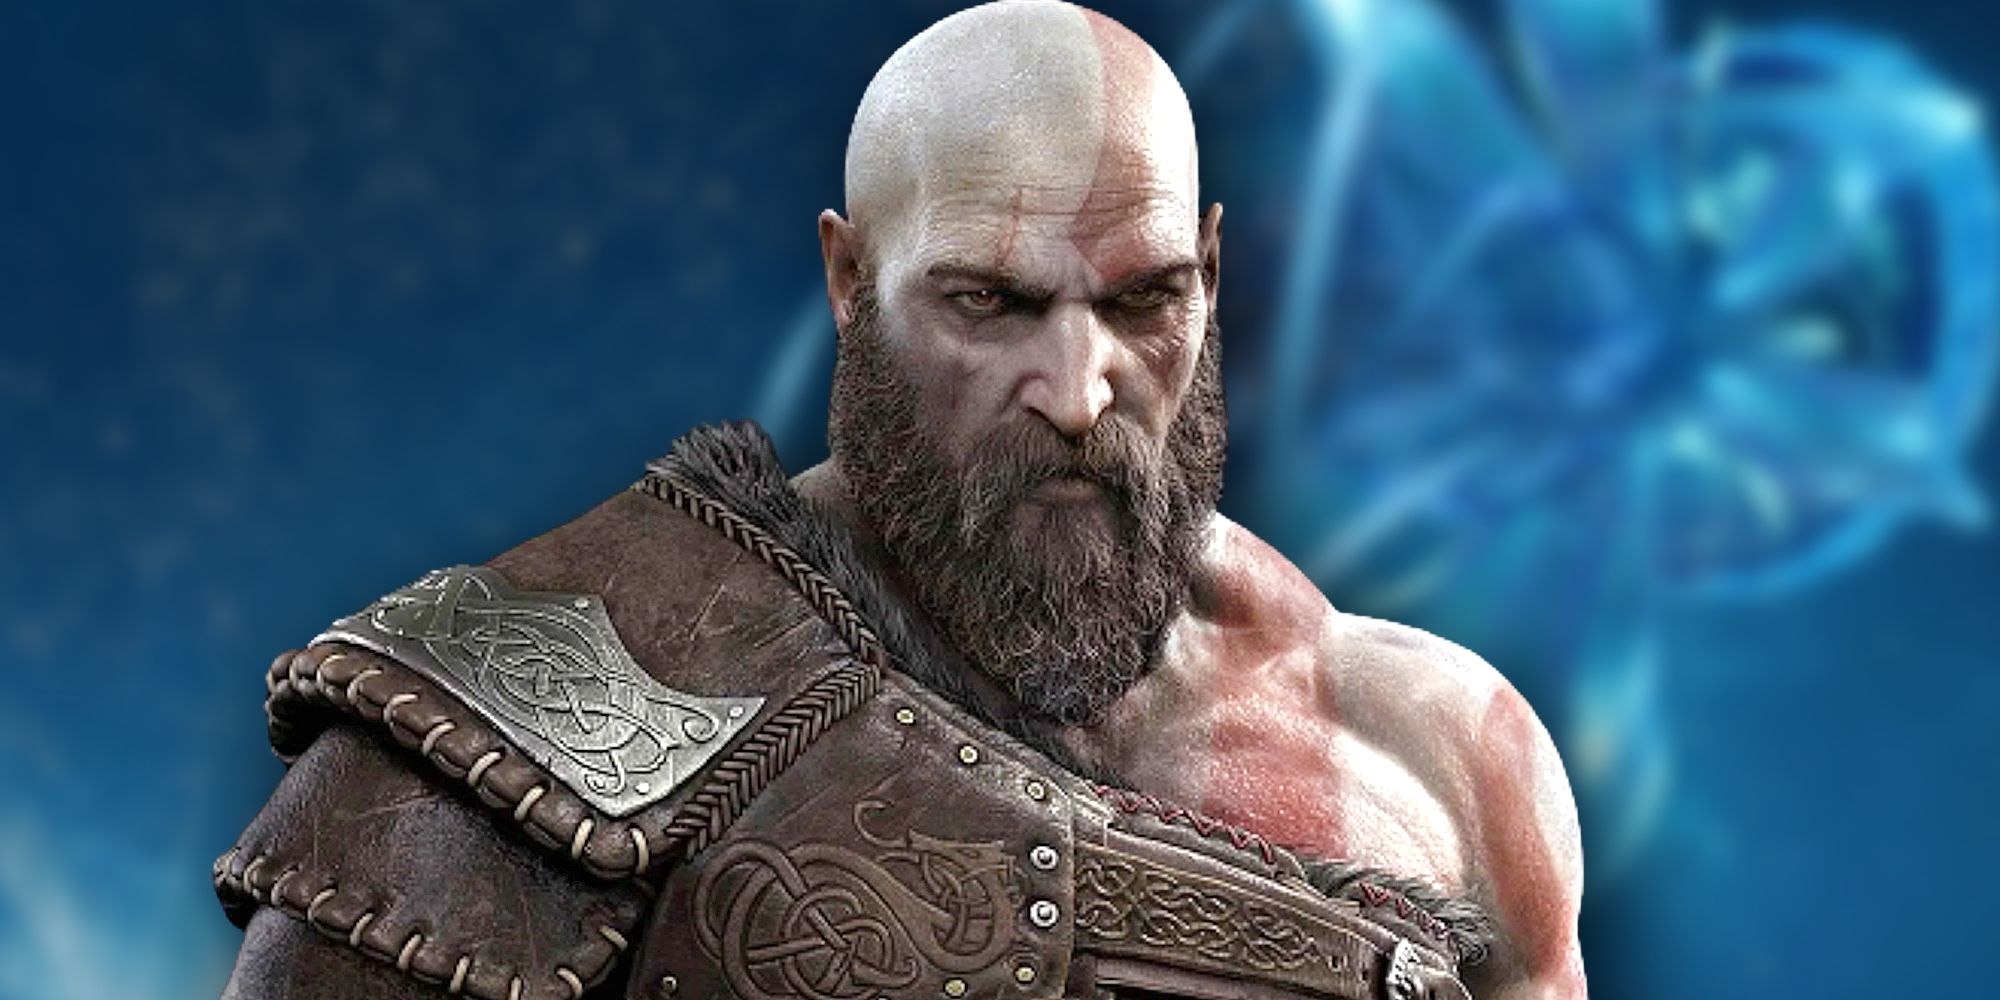 Image of the God of War Kratos giving his characteristic menacing glare.